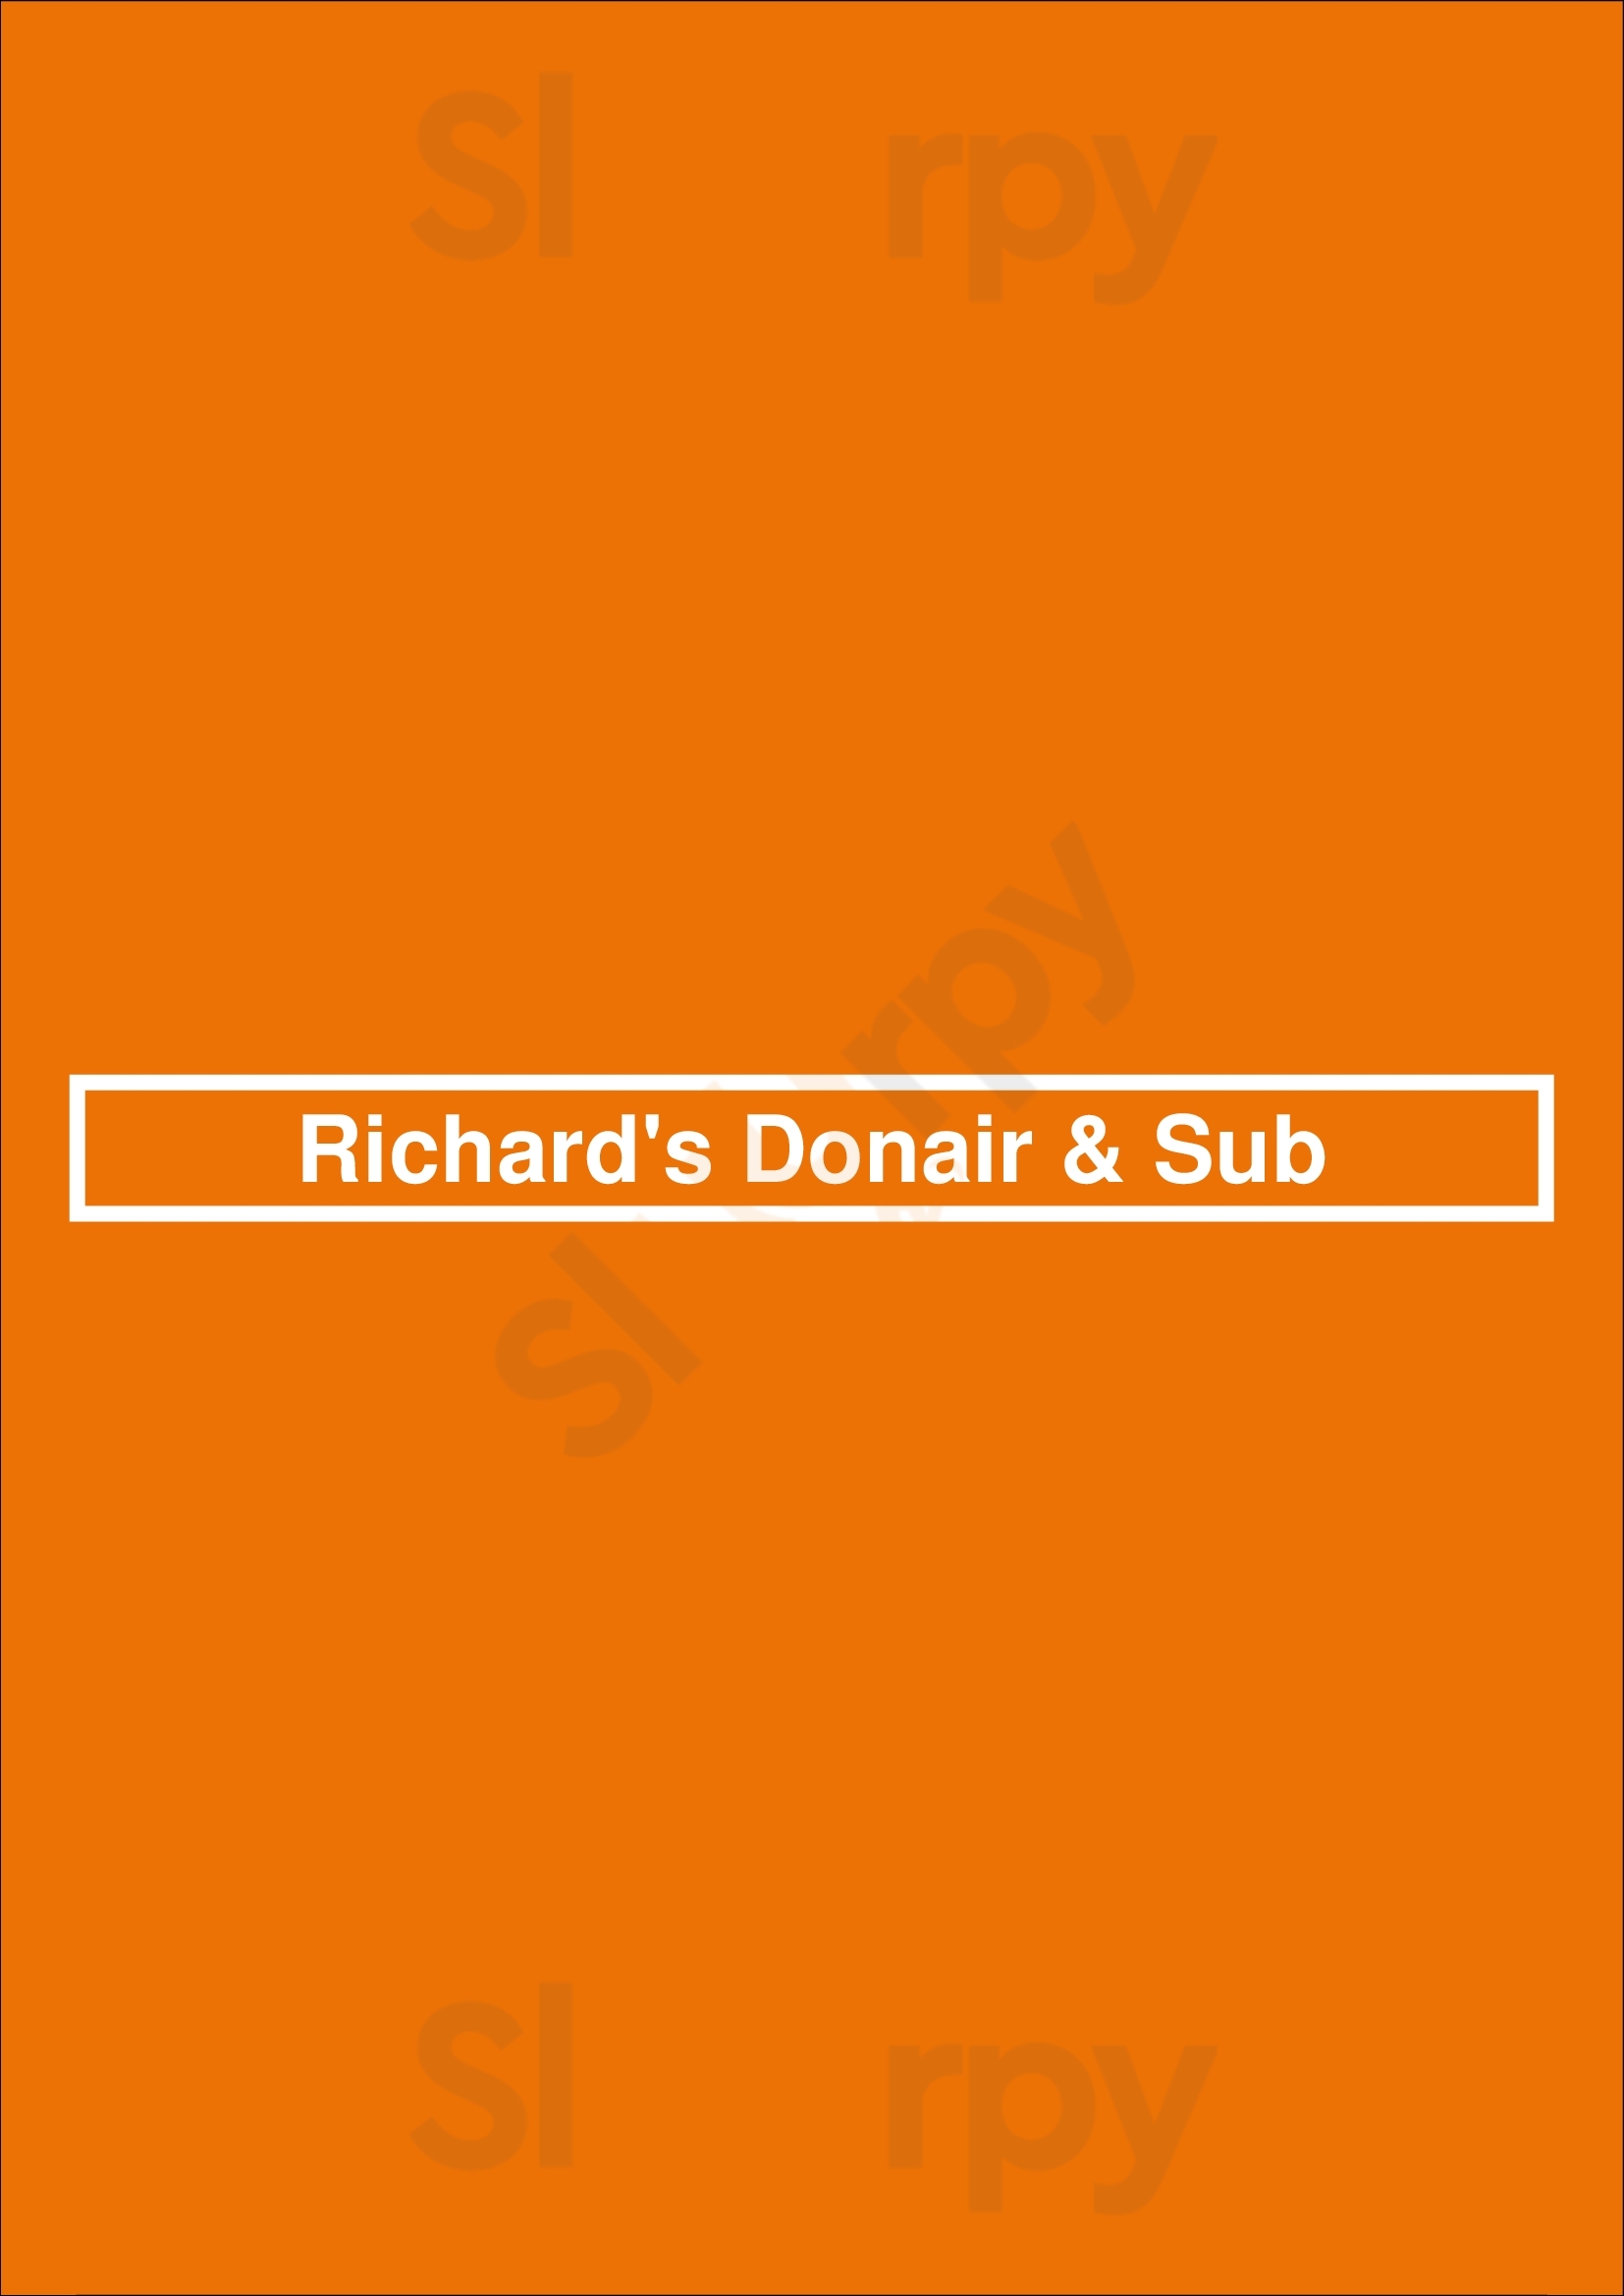 Richard's Donair & Sub Edmonton Menu - 1